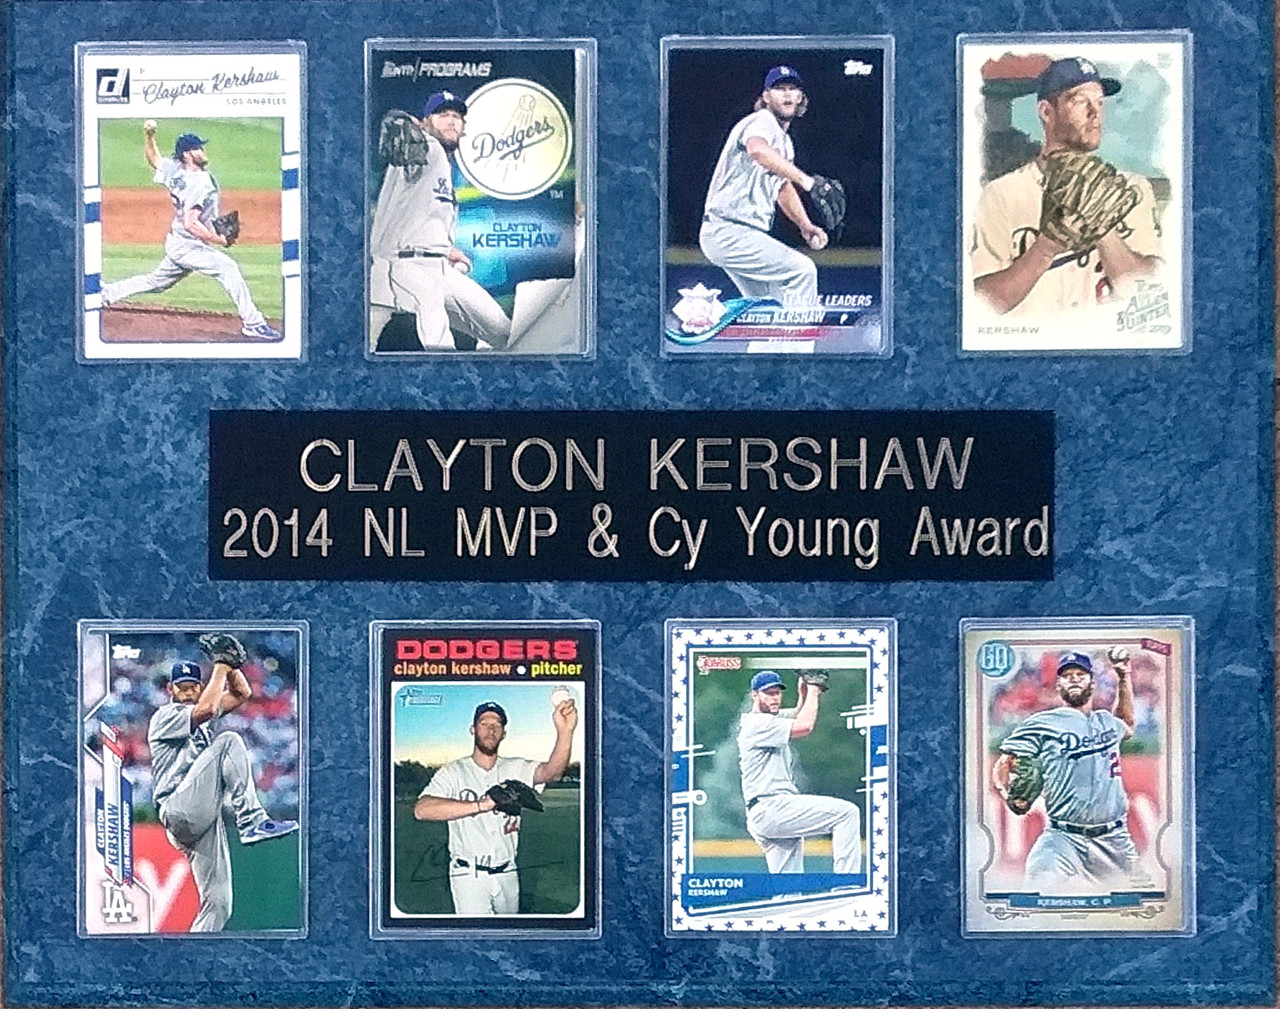 Clayton Kershaw 2009 Upper Deck #984 Card Los Angeles Dodgers